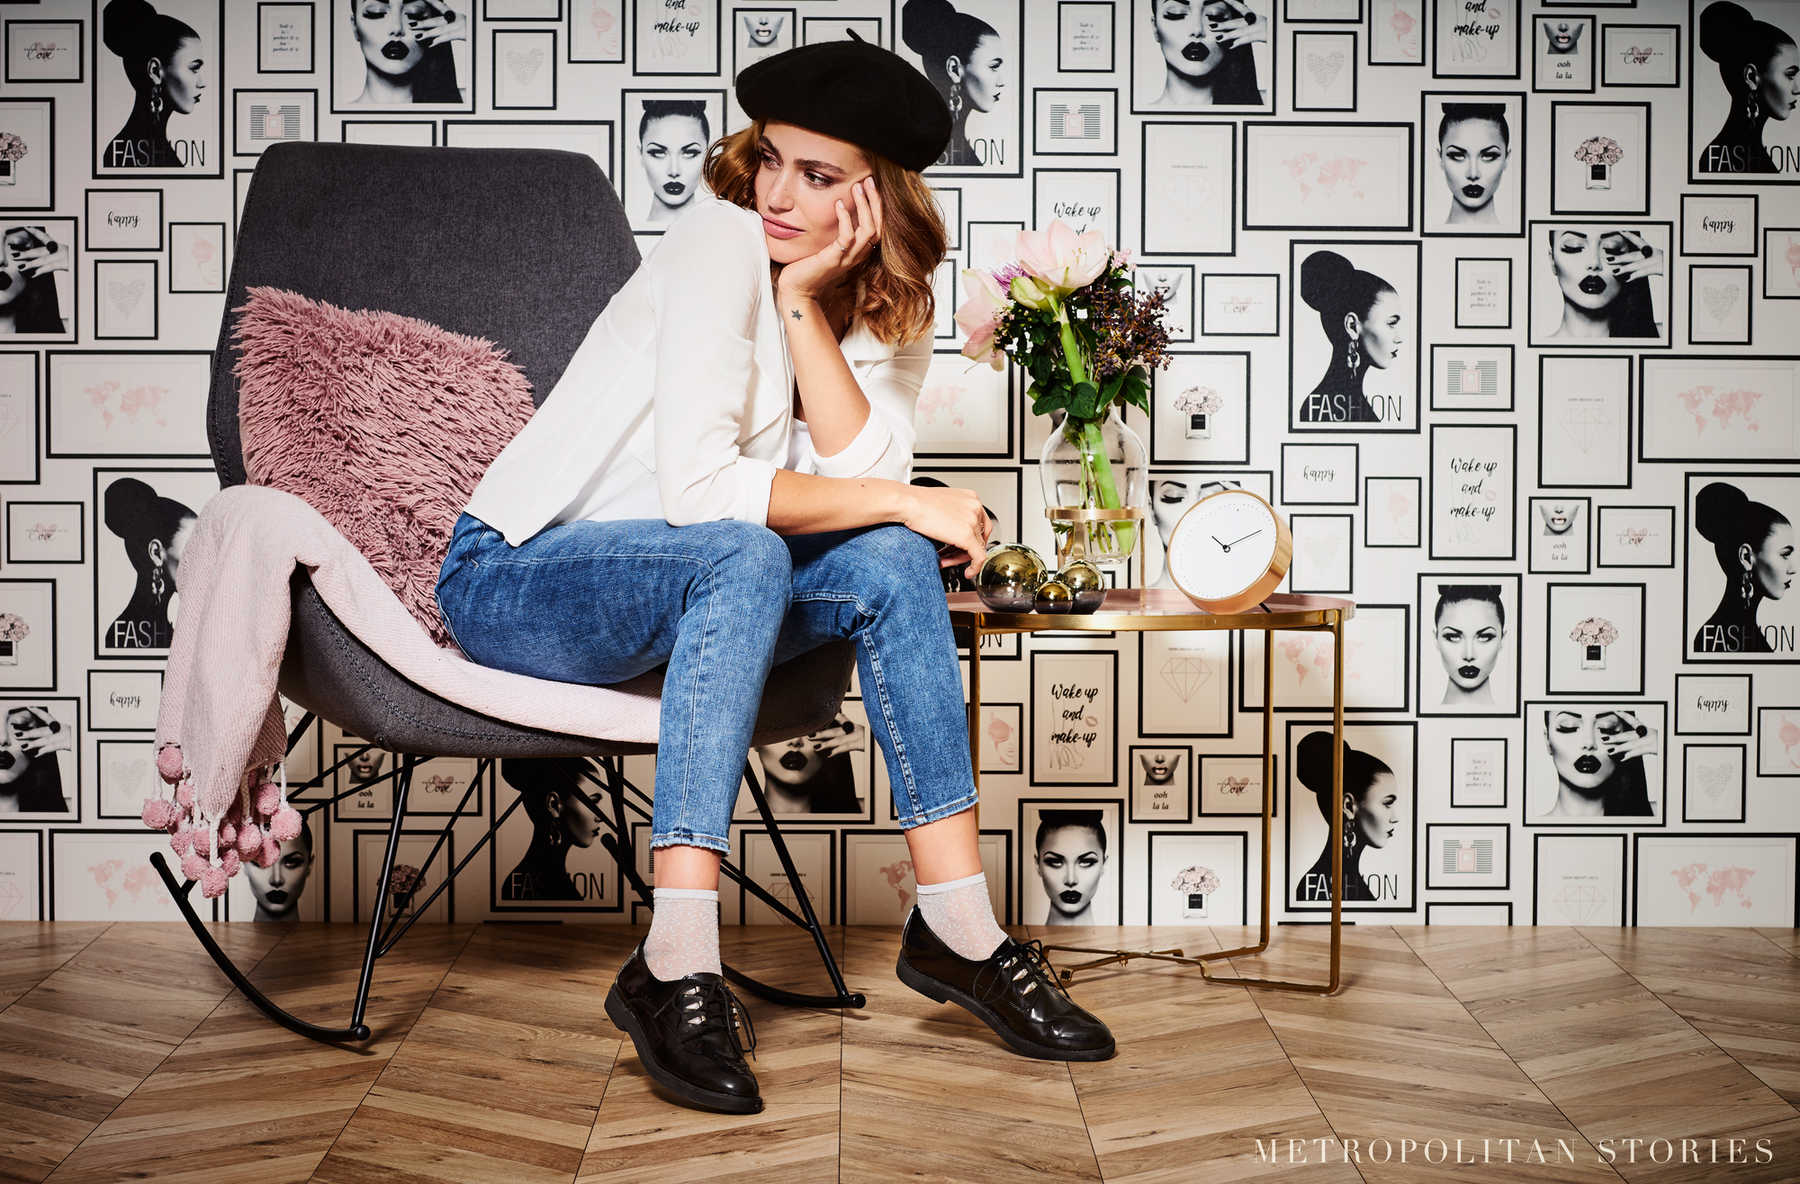             Behang Fashion Design met Wall Decor - Zwart, Wit, Grijs, Roze
        